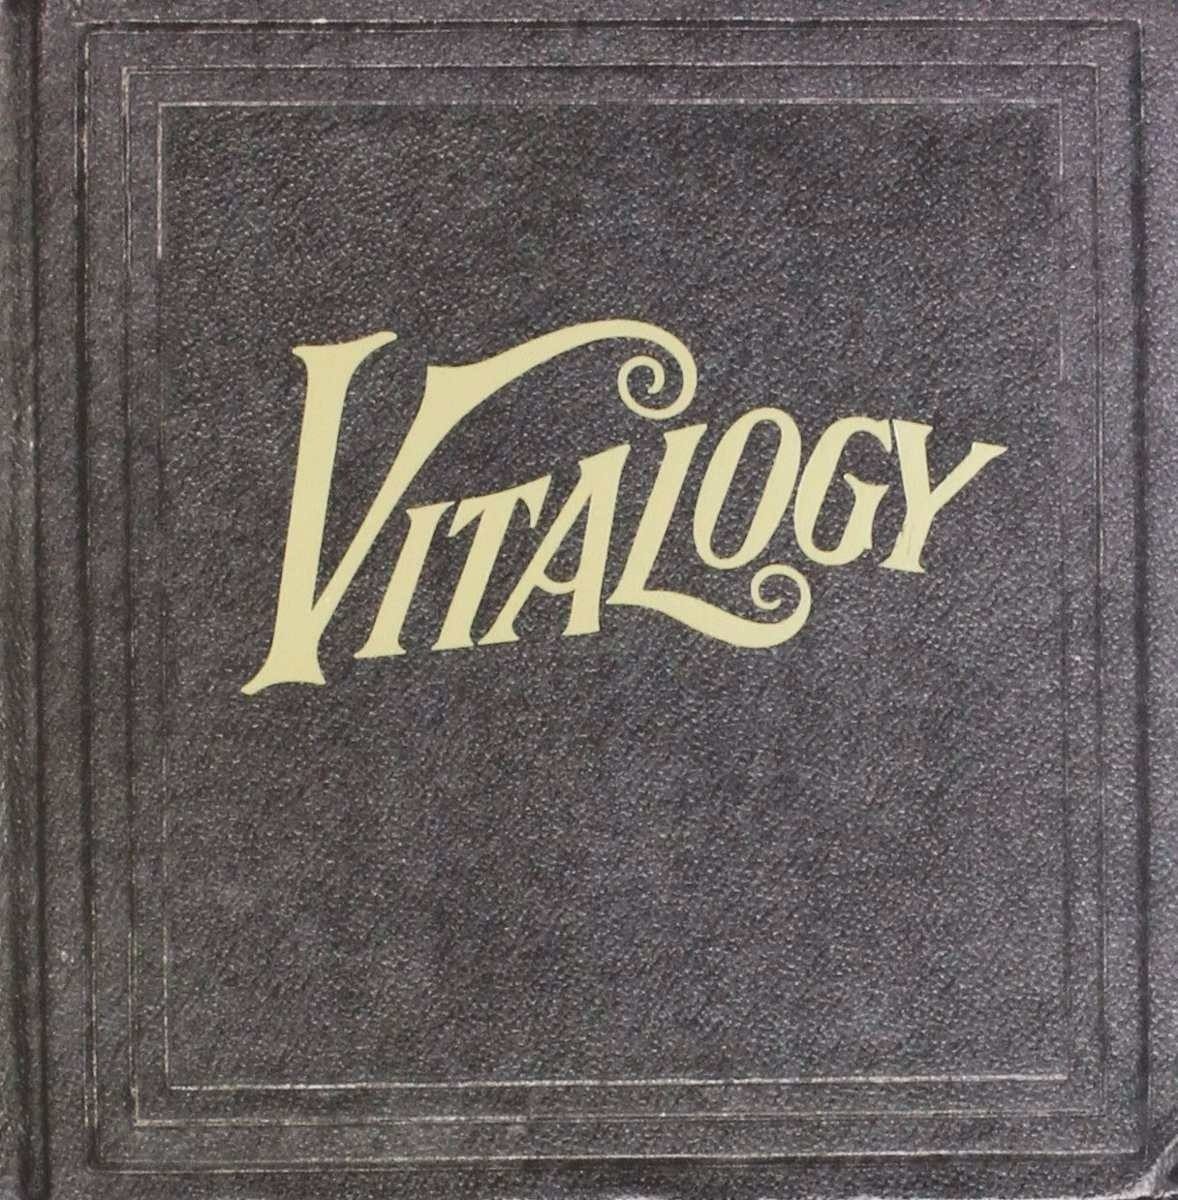 Los mejores terceros álbumes de estudio: Solo Obras Maestras. Pearl-jam-vitalogy-cd-importado-de-usa-D_NQ_NP_723719-MLA27622006643_062018-F